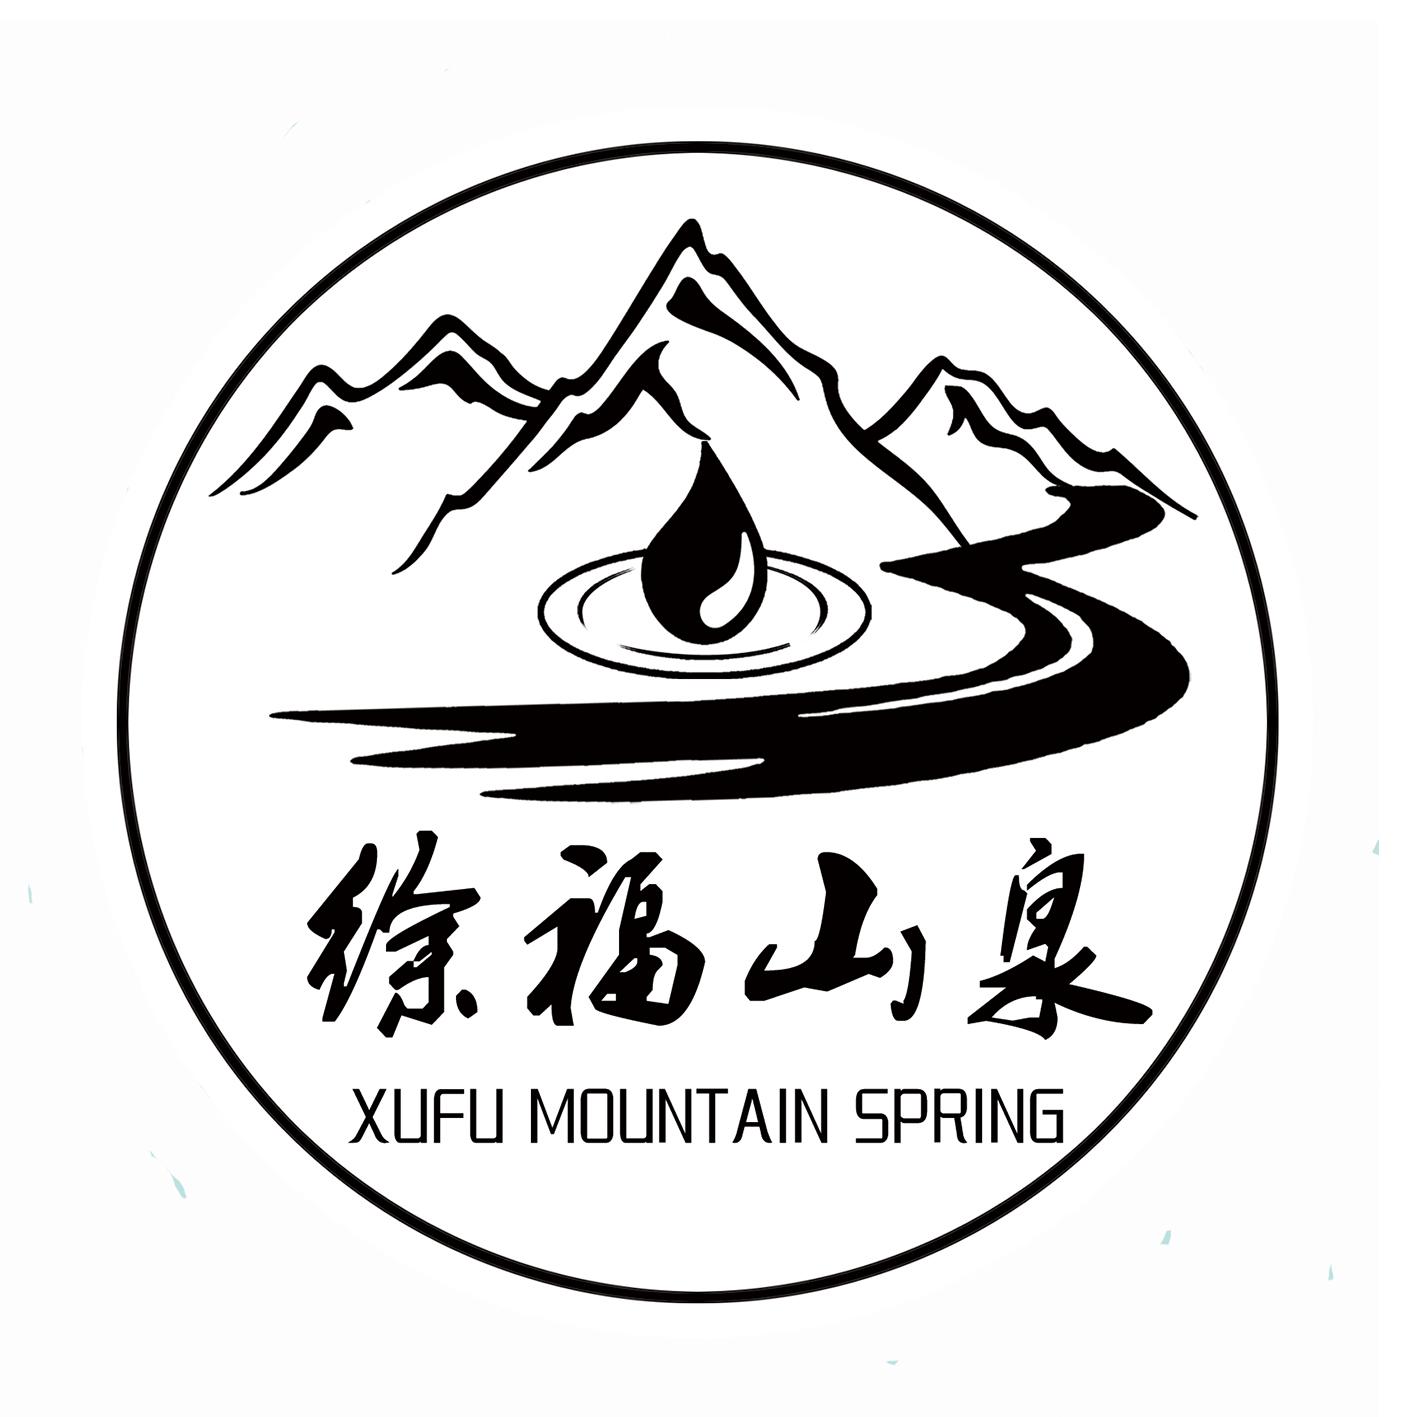 徐福山泉 xufu mountain spring